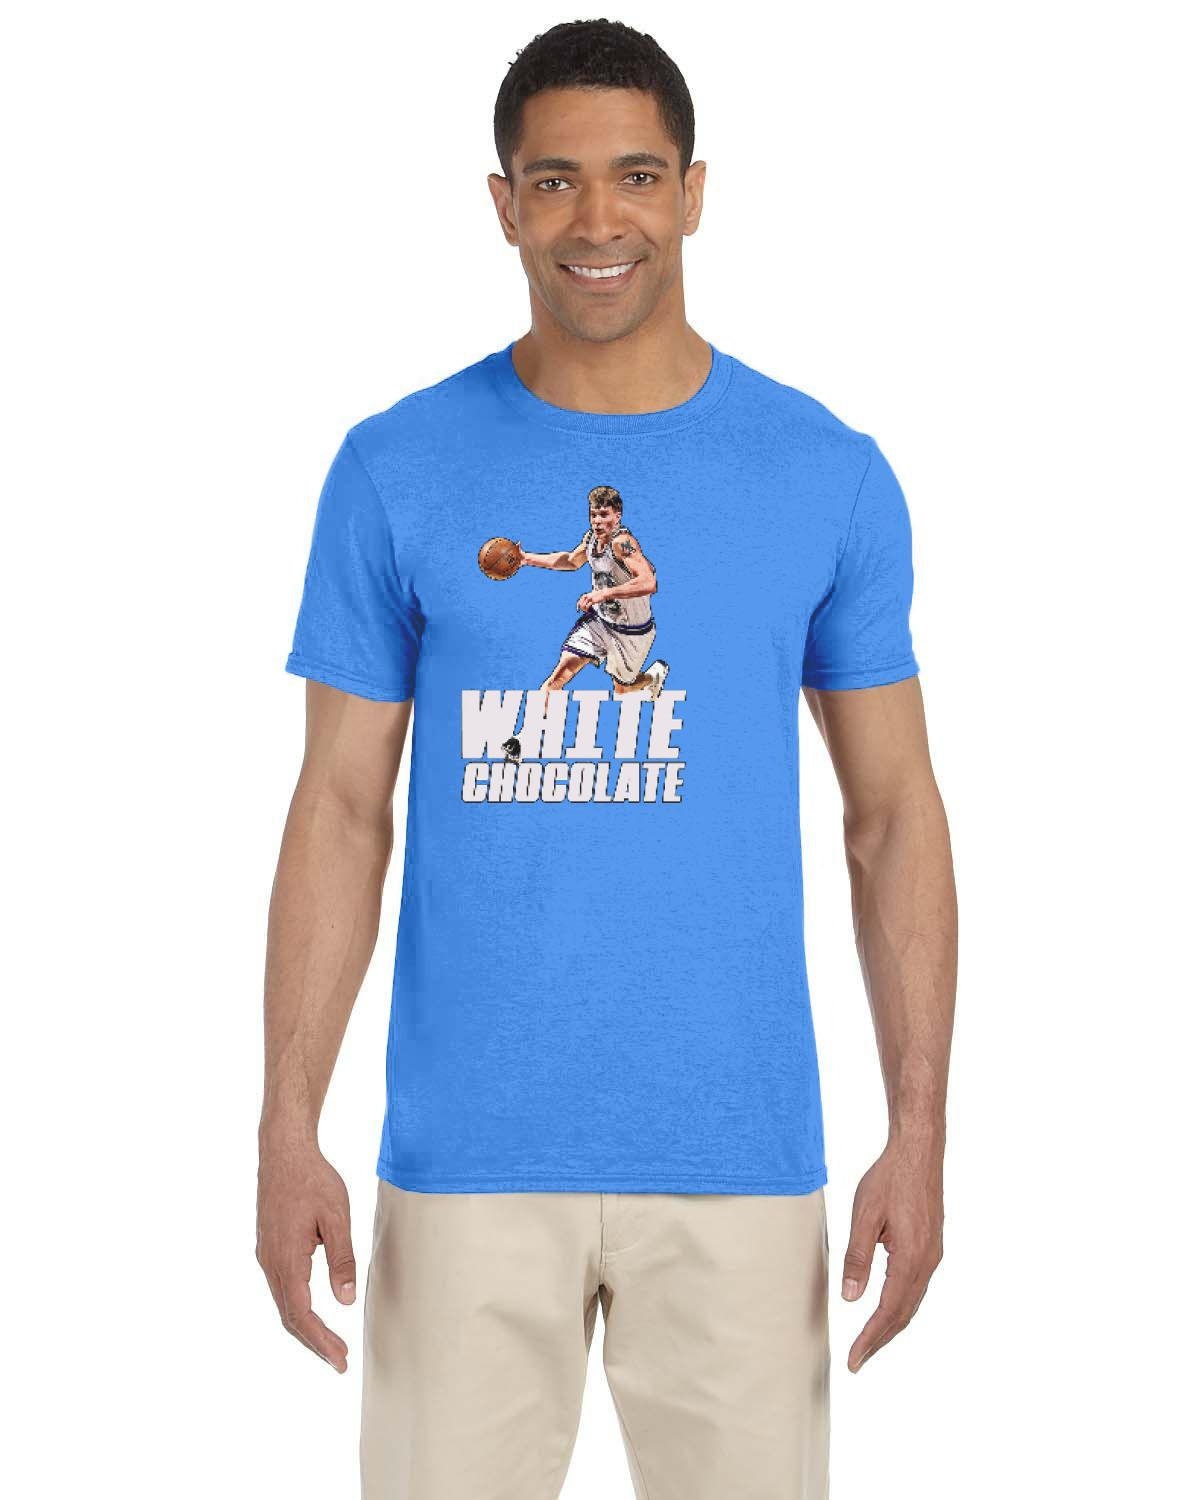 Discover Jason Williams White Chocolate Unisex Adult Softstyle T-Shirt